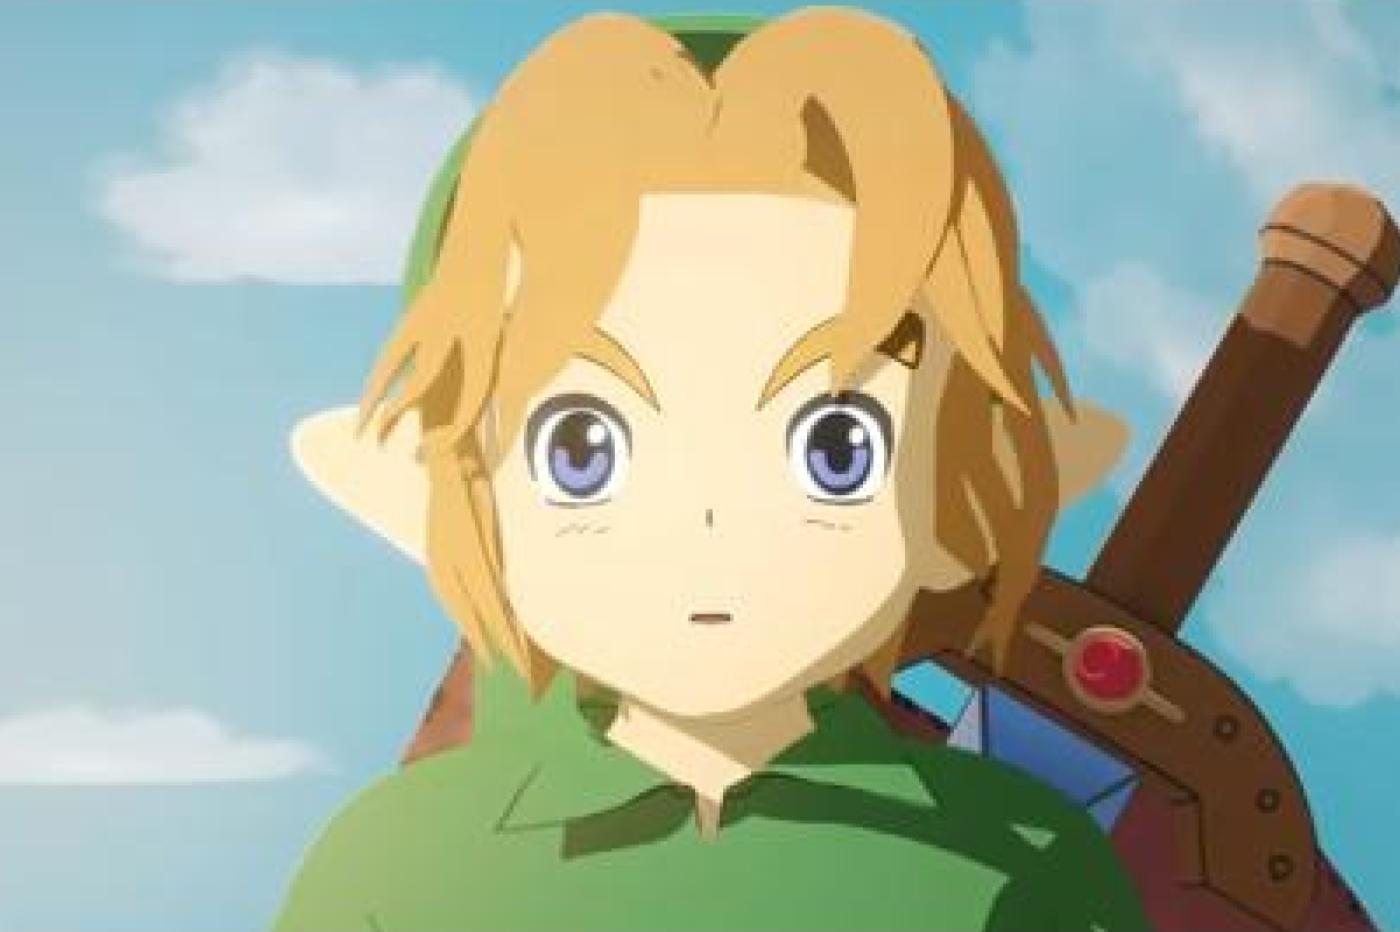 Zelda x Ghibli crossover